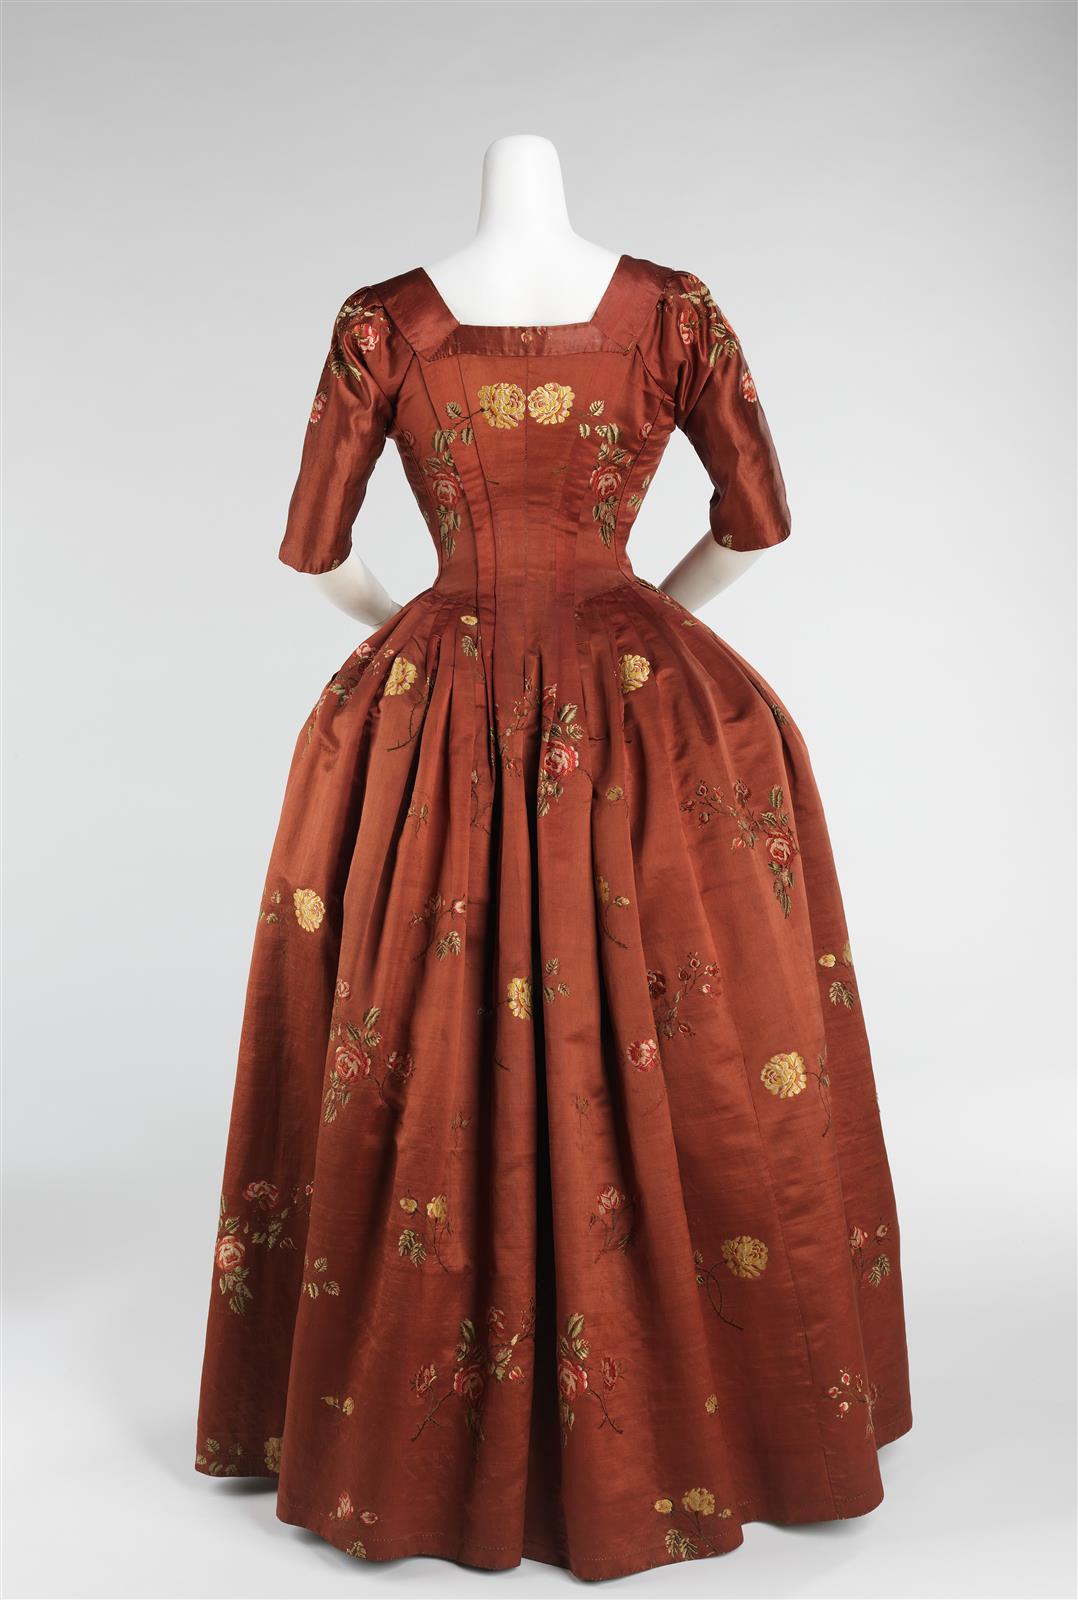 1750. Robe à l'Anglaise. British. Silk